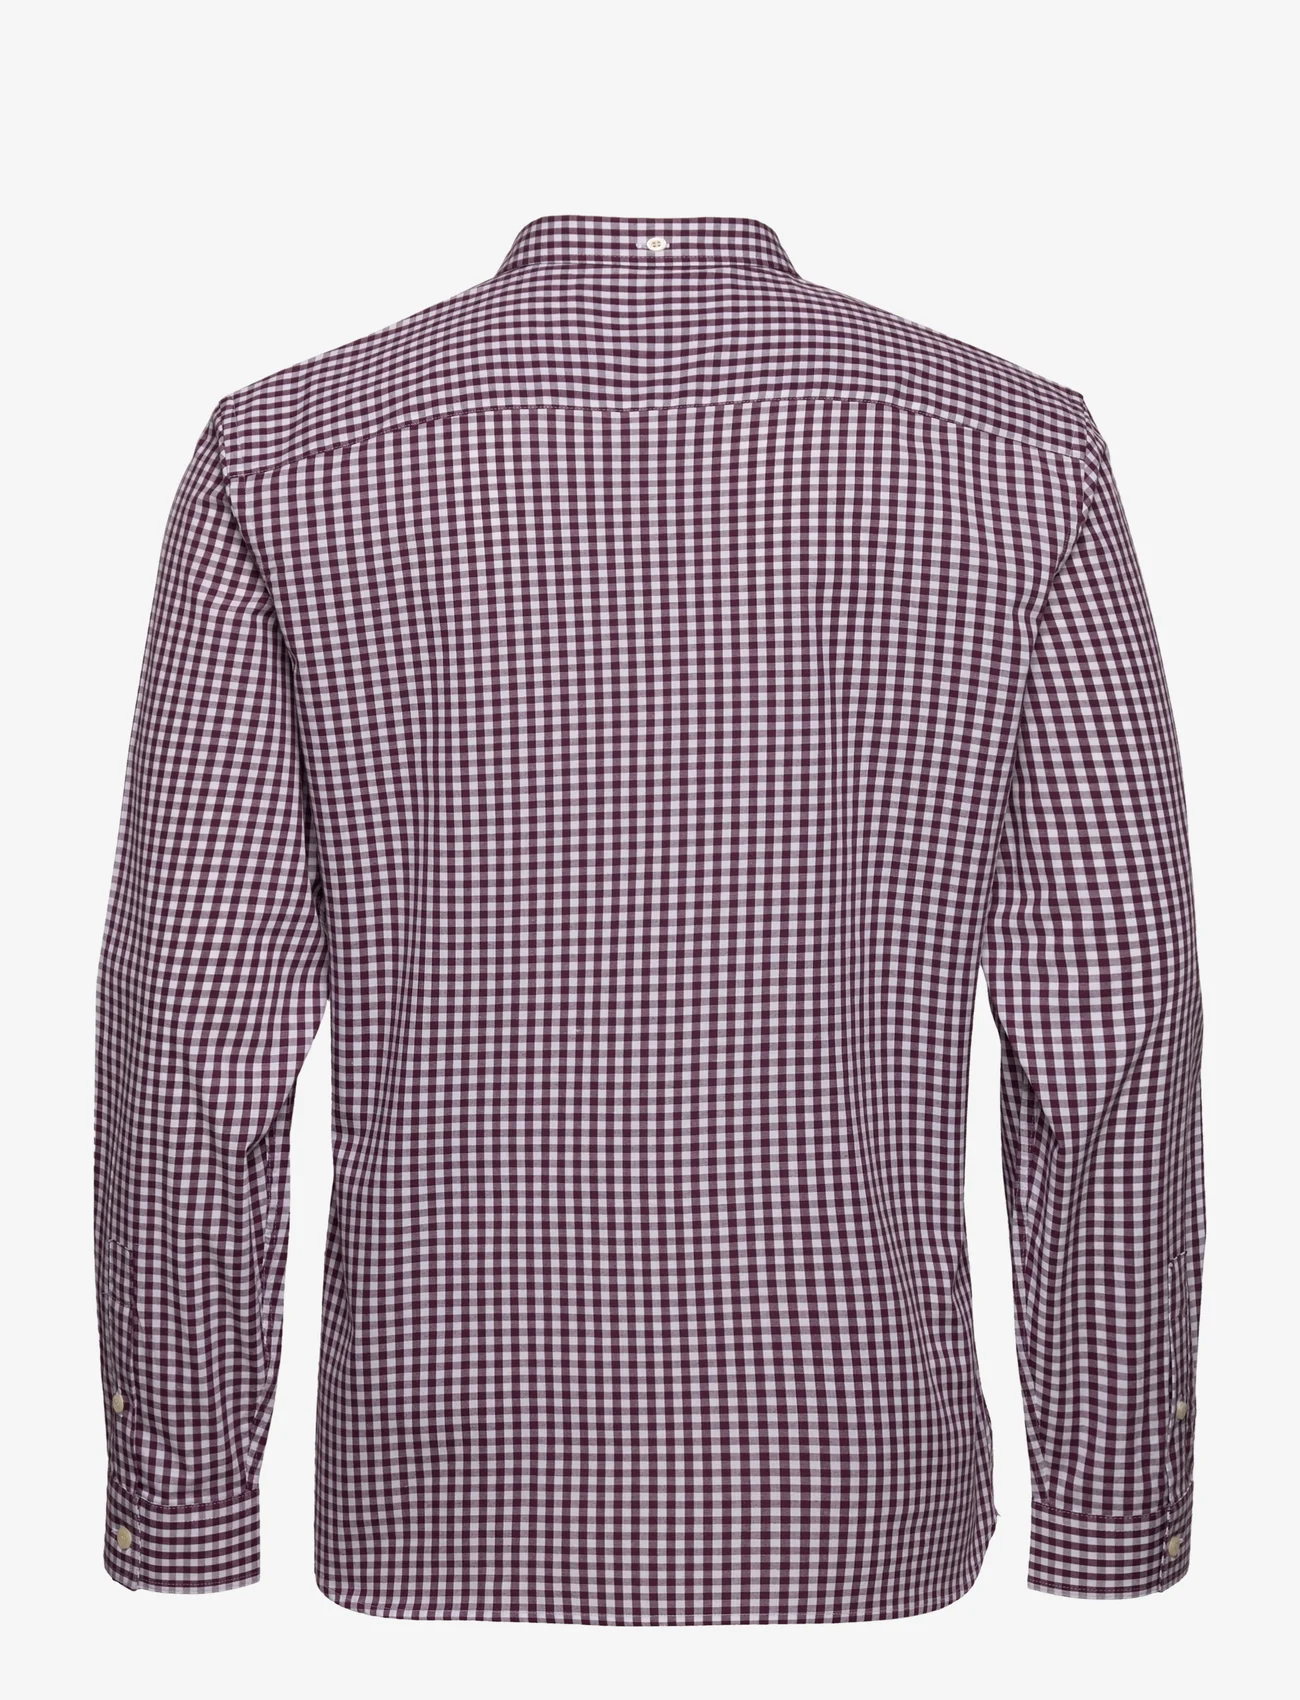 Lyle & Scott - LS Slim Fit Gingham Shirt - checkered shirts - burgundy/white - 1